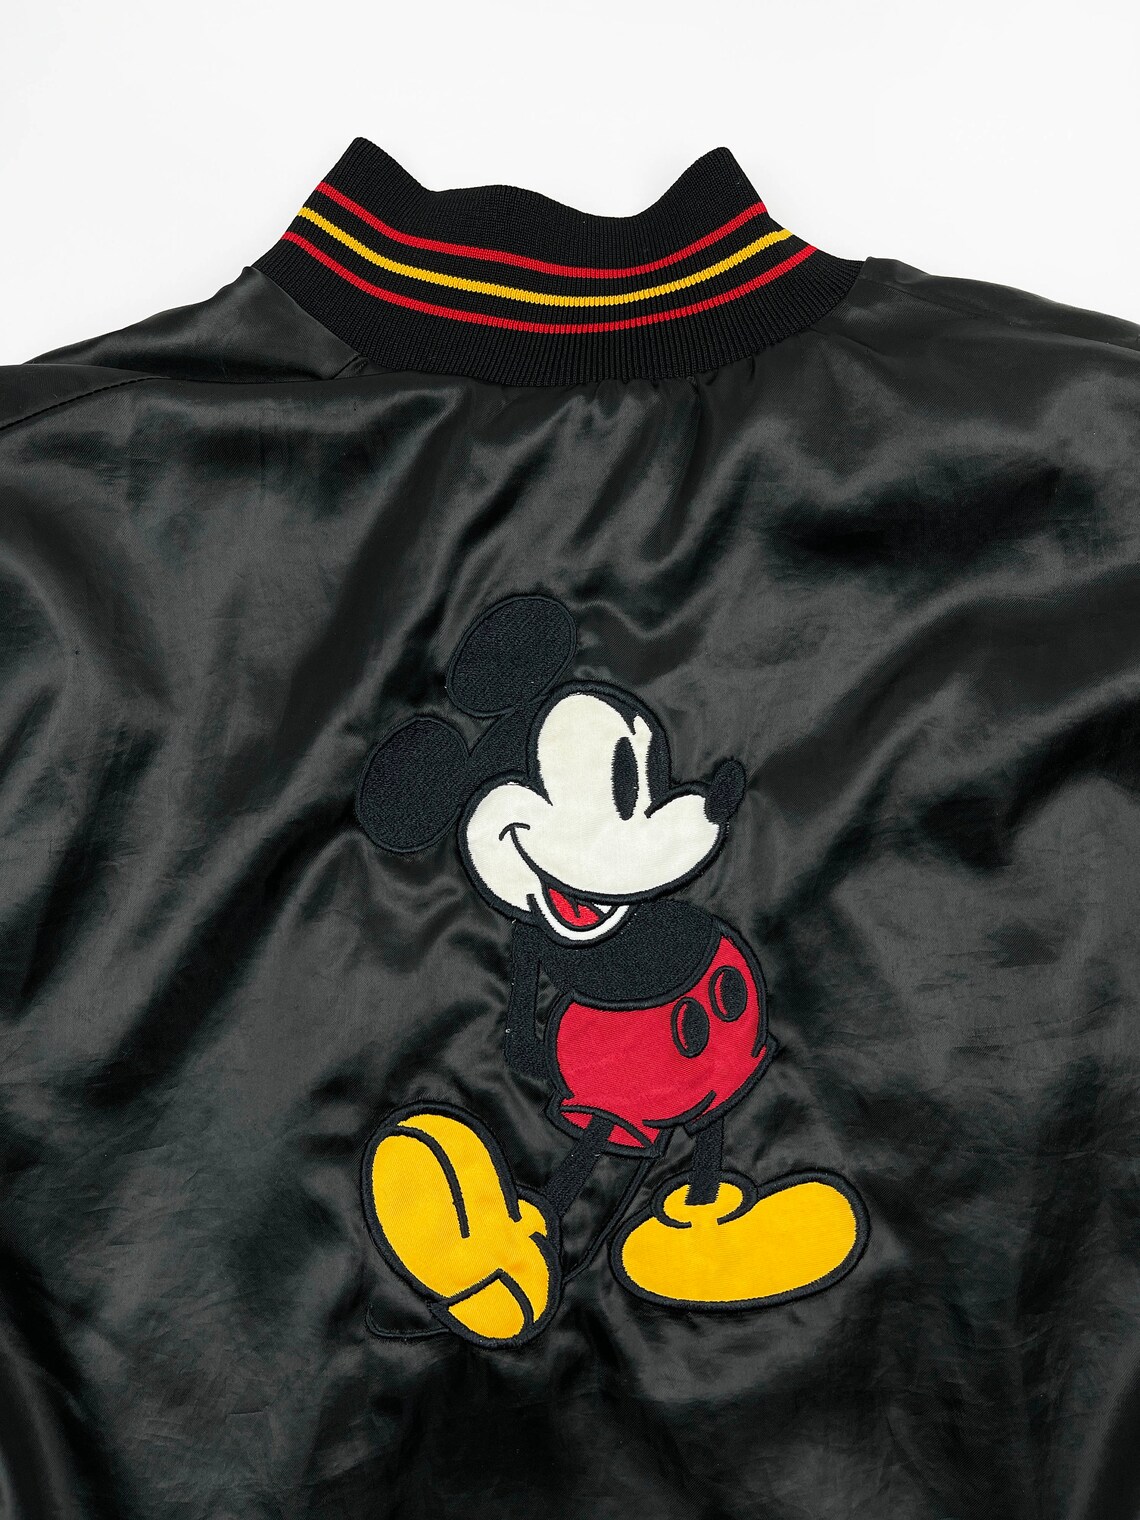 Vintage Mickey Mouse Bomber Jacket 80s Disney R5 | Etsy